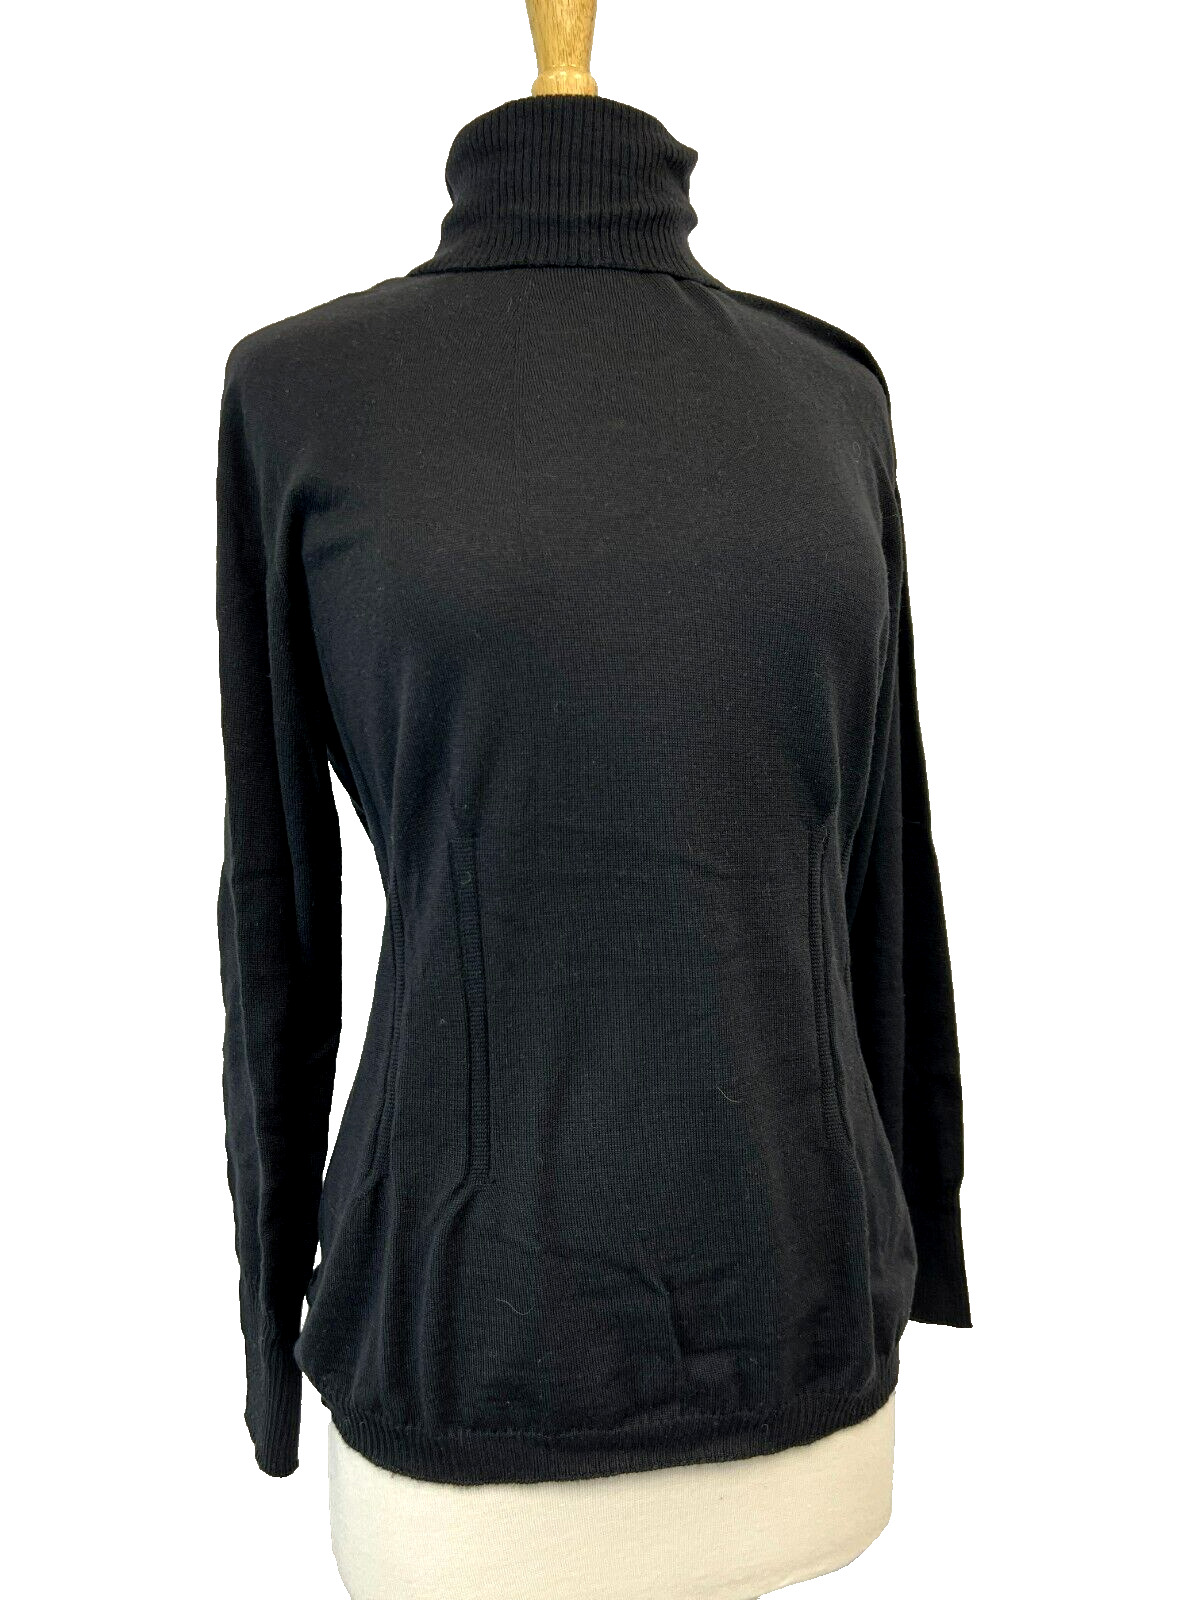 NWT Escada Black Turtle Neck Sweater Light Weight Wool Yarn Long Sleeves SZ L